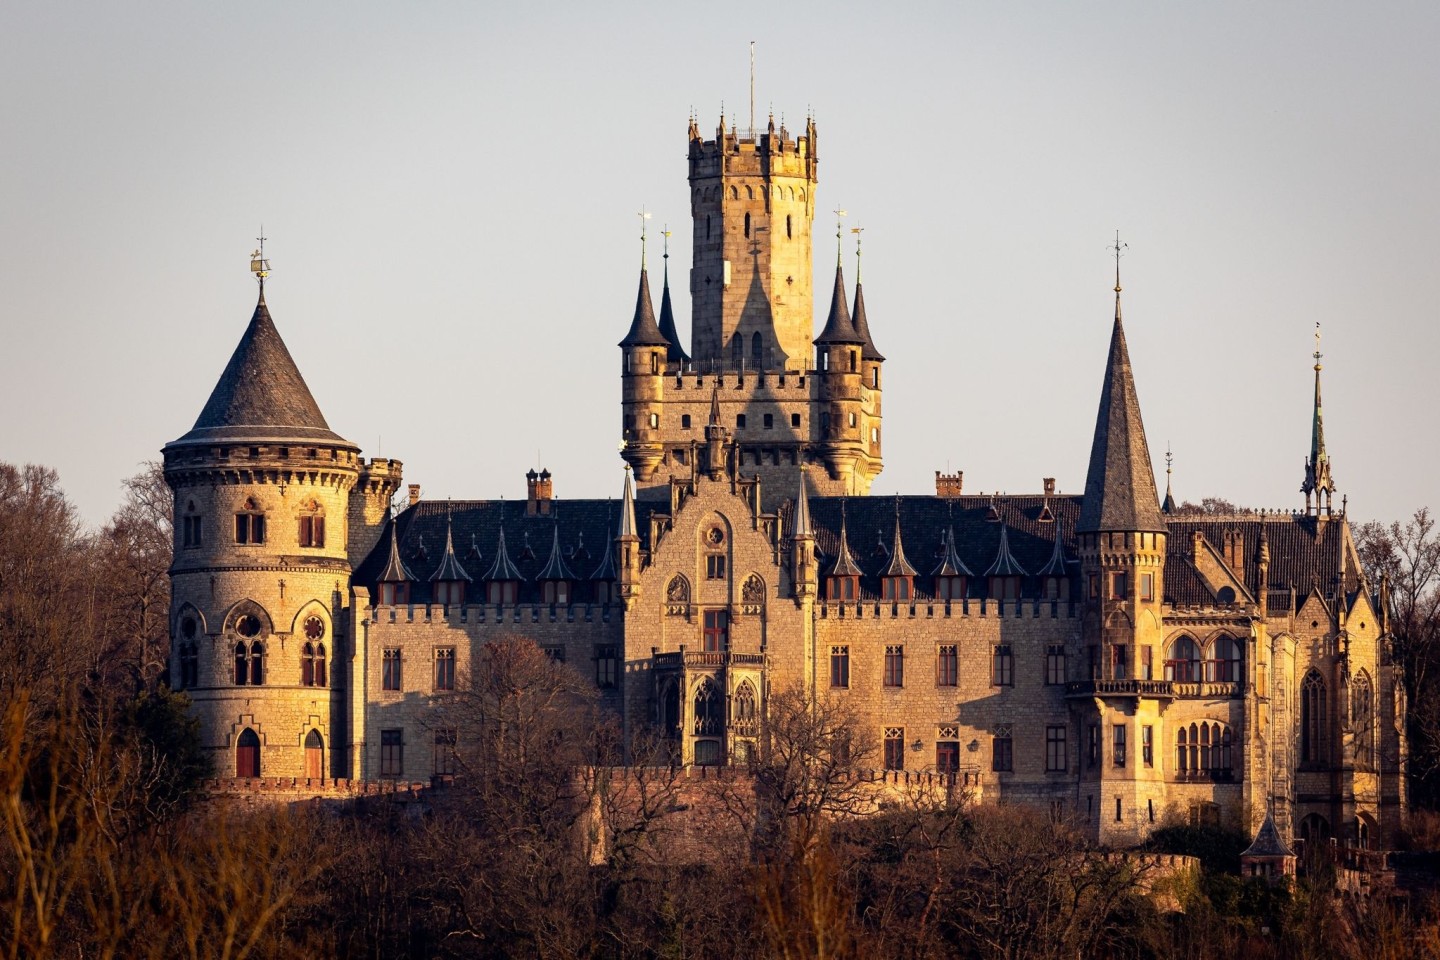 Das Schloss Marienburg bei Hannover.